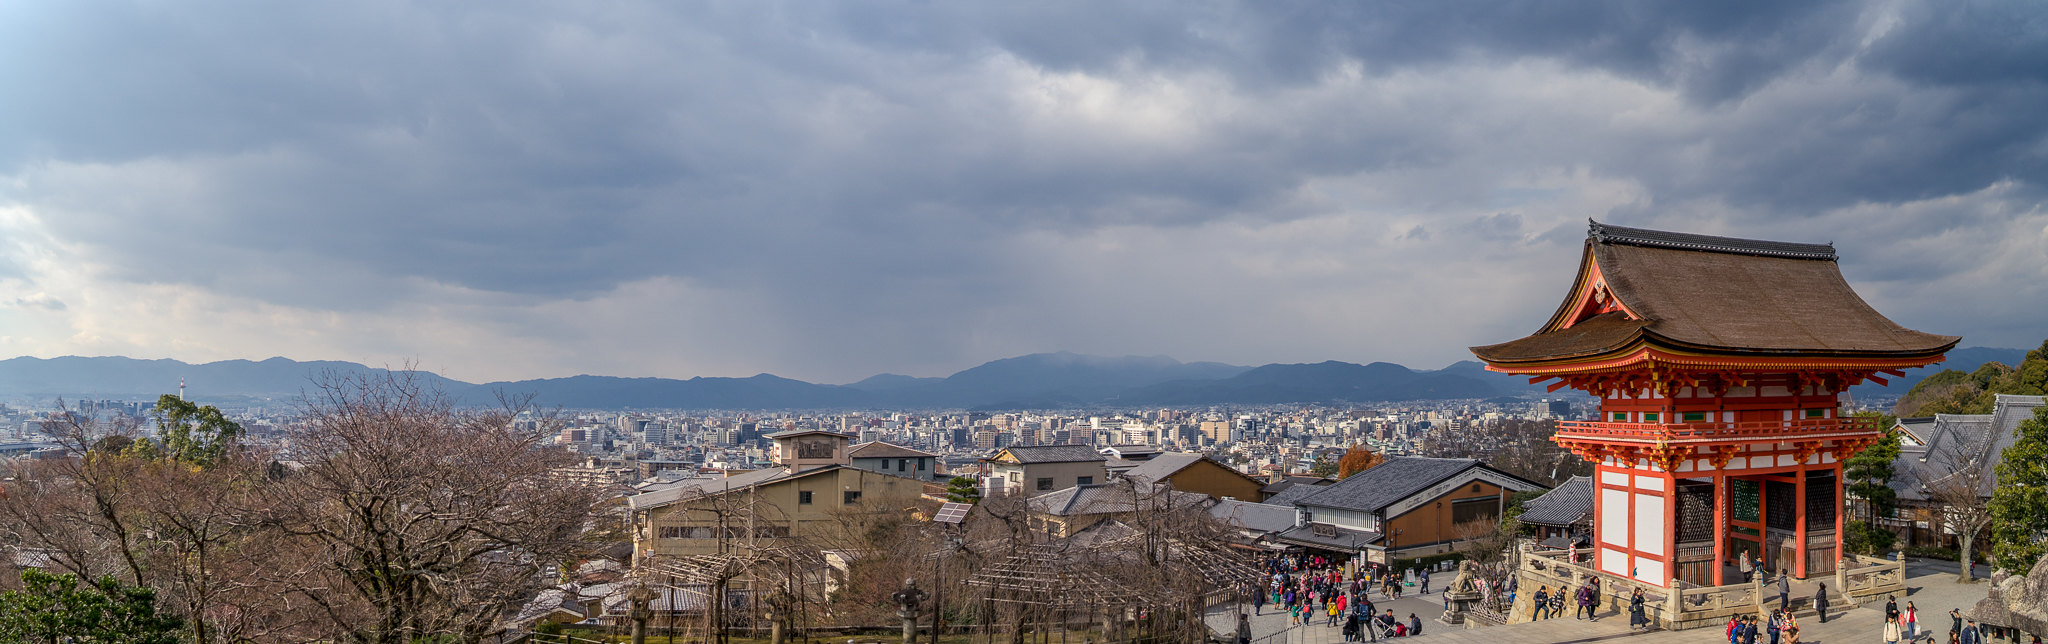 Panorama from Kiyomizu-dera